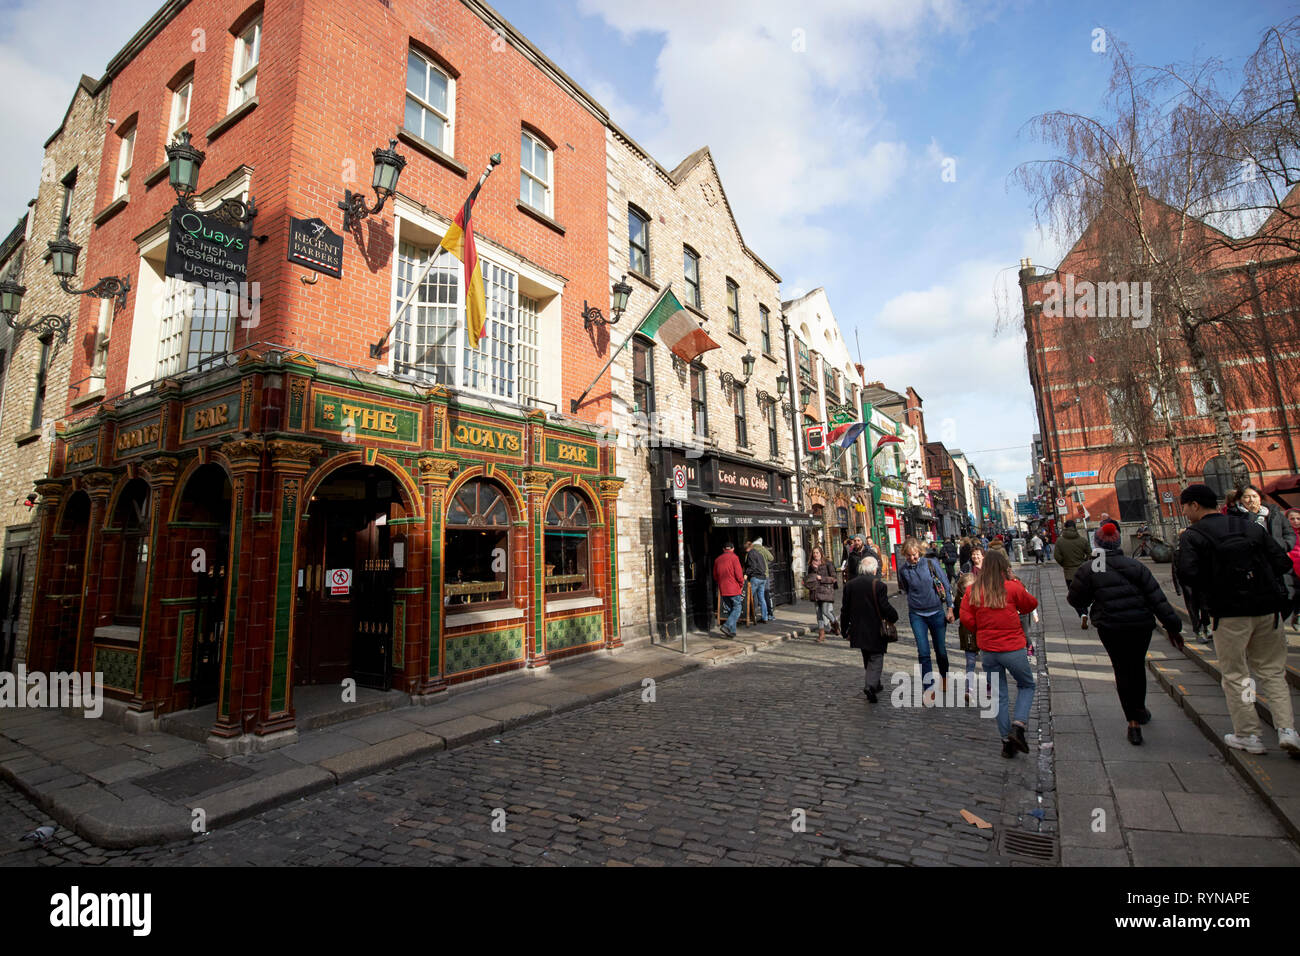 quays bar and restaurant in temple bar square Dublin Republic of Ireland Europe Stock Photo